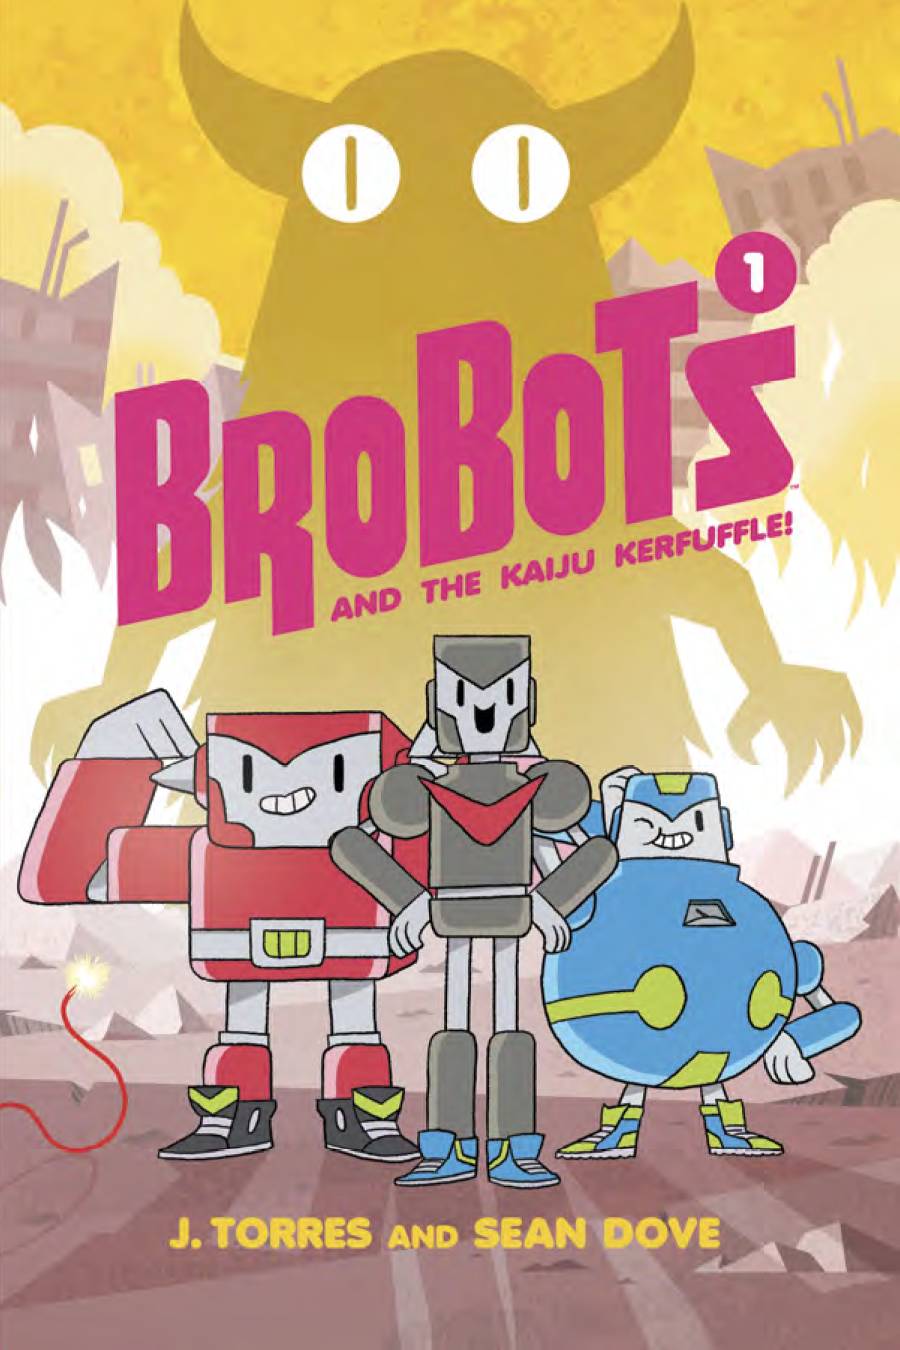 Brobots Hardcover Volume 1 Kaiju Kerfuffle